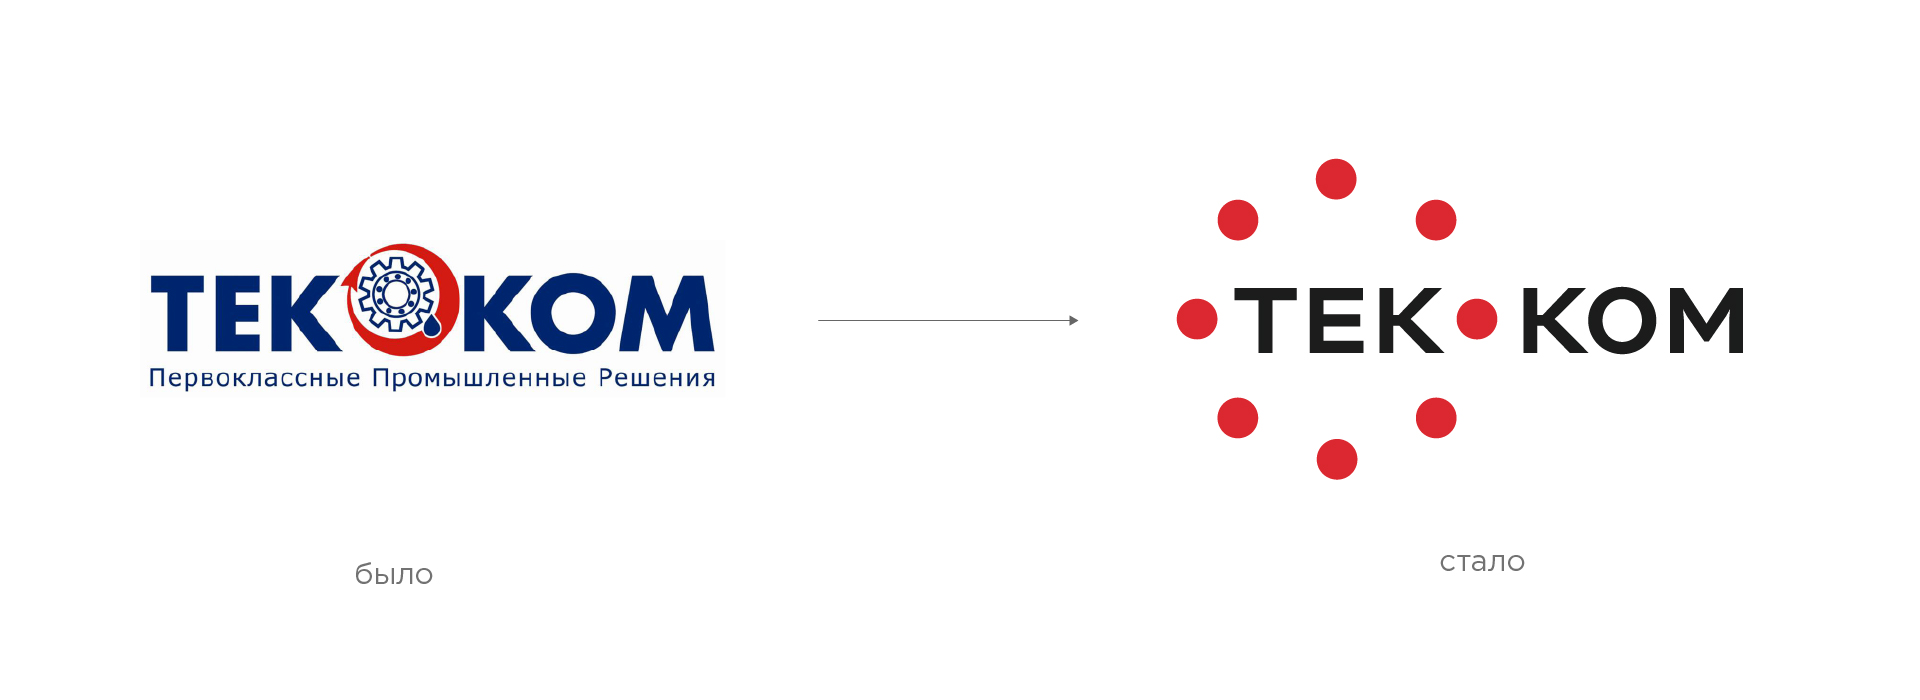 Логотип компании ТЕК-КОМ: было/стало